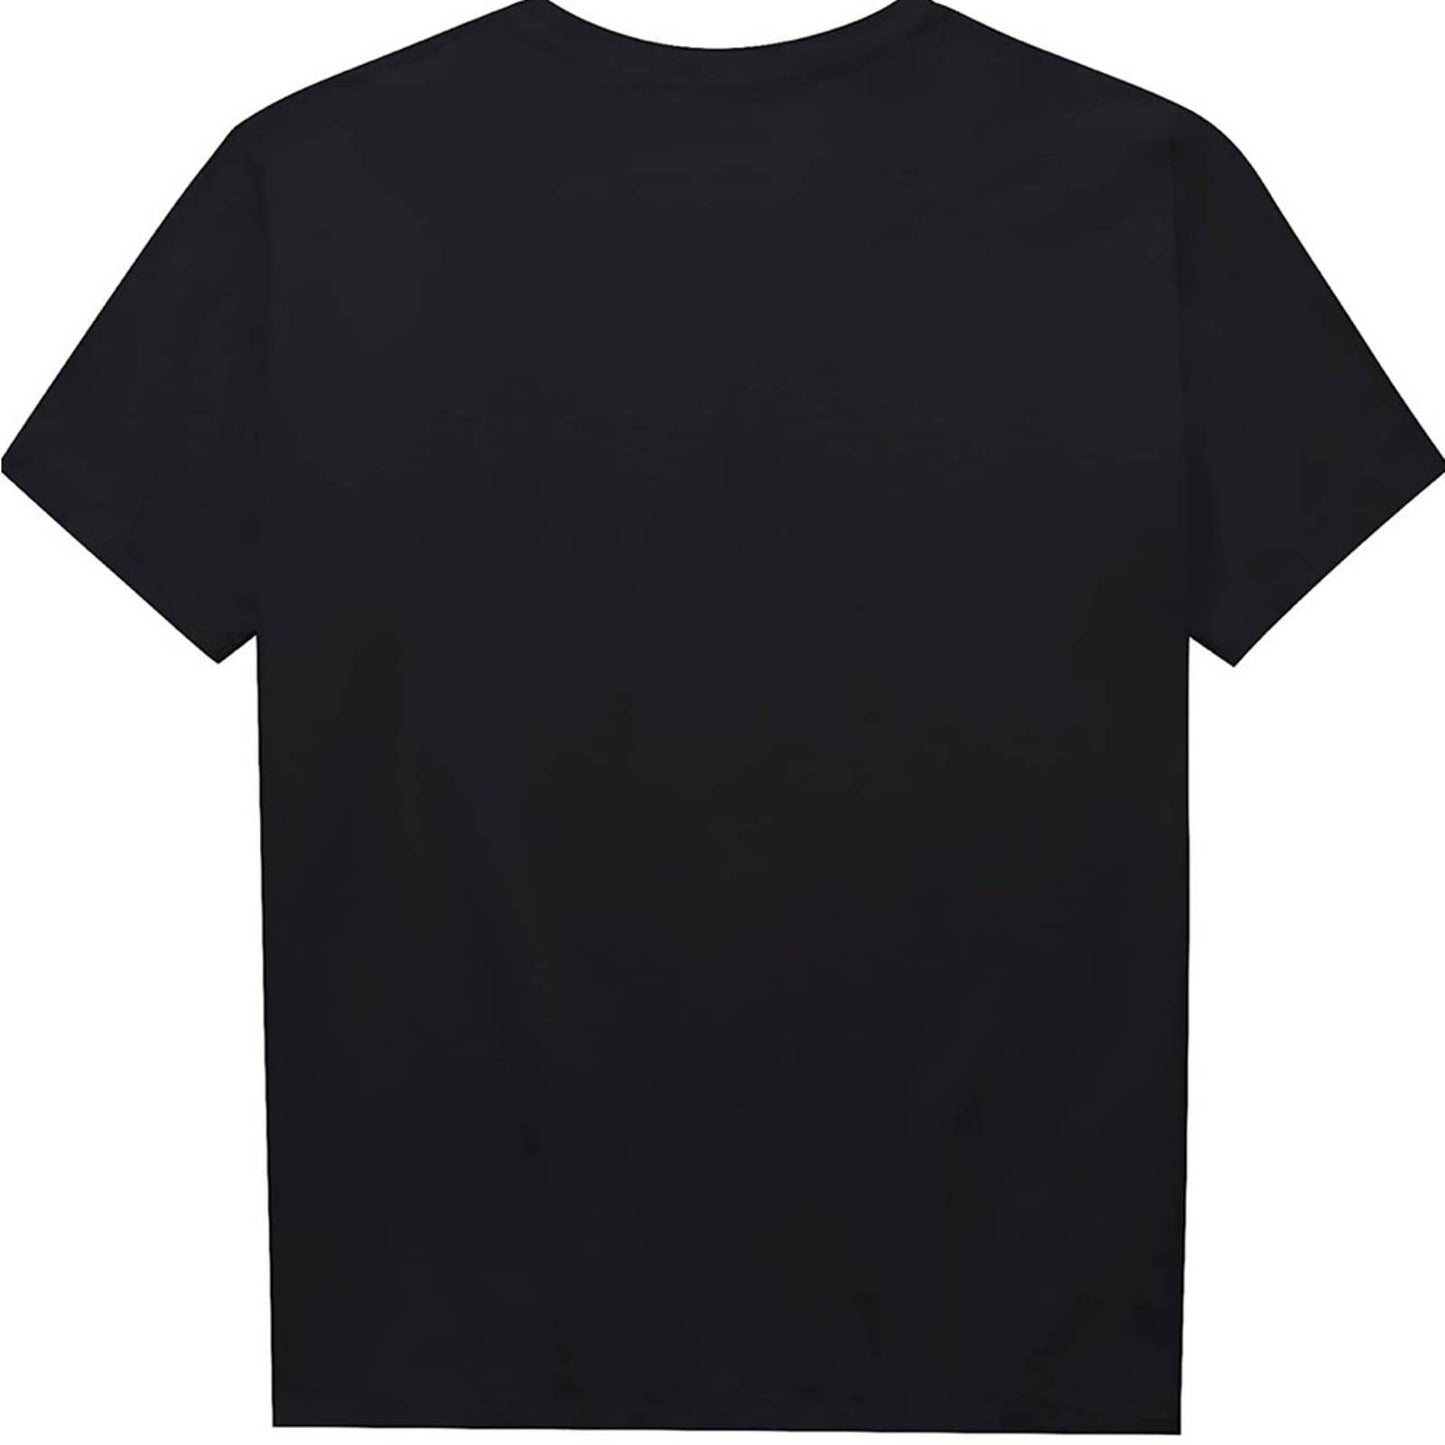 KESIHAN Men's Casual Cotton Spandex Striped Crewneck Long-Sleeve T-Shirt Basic